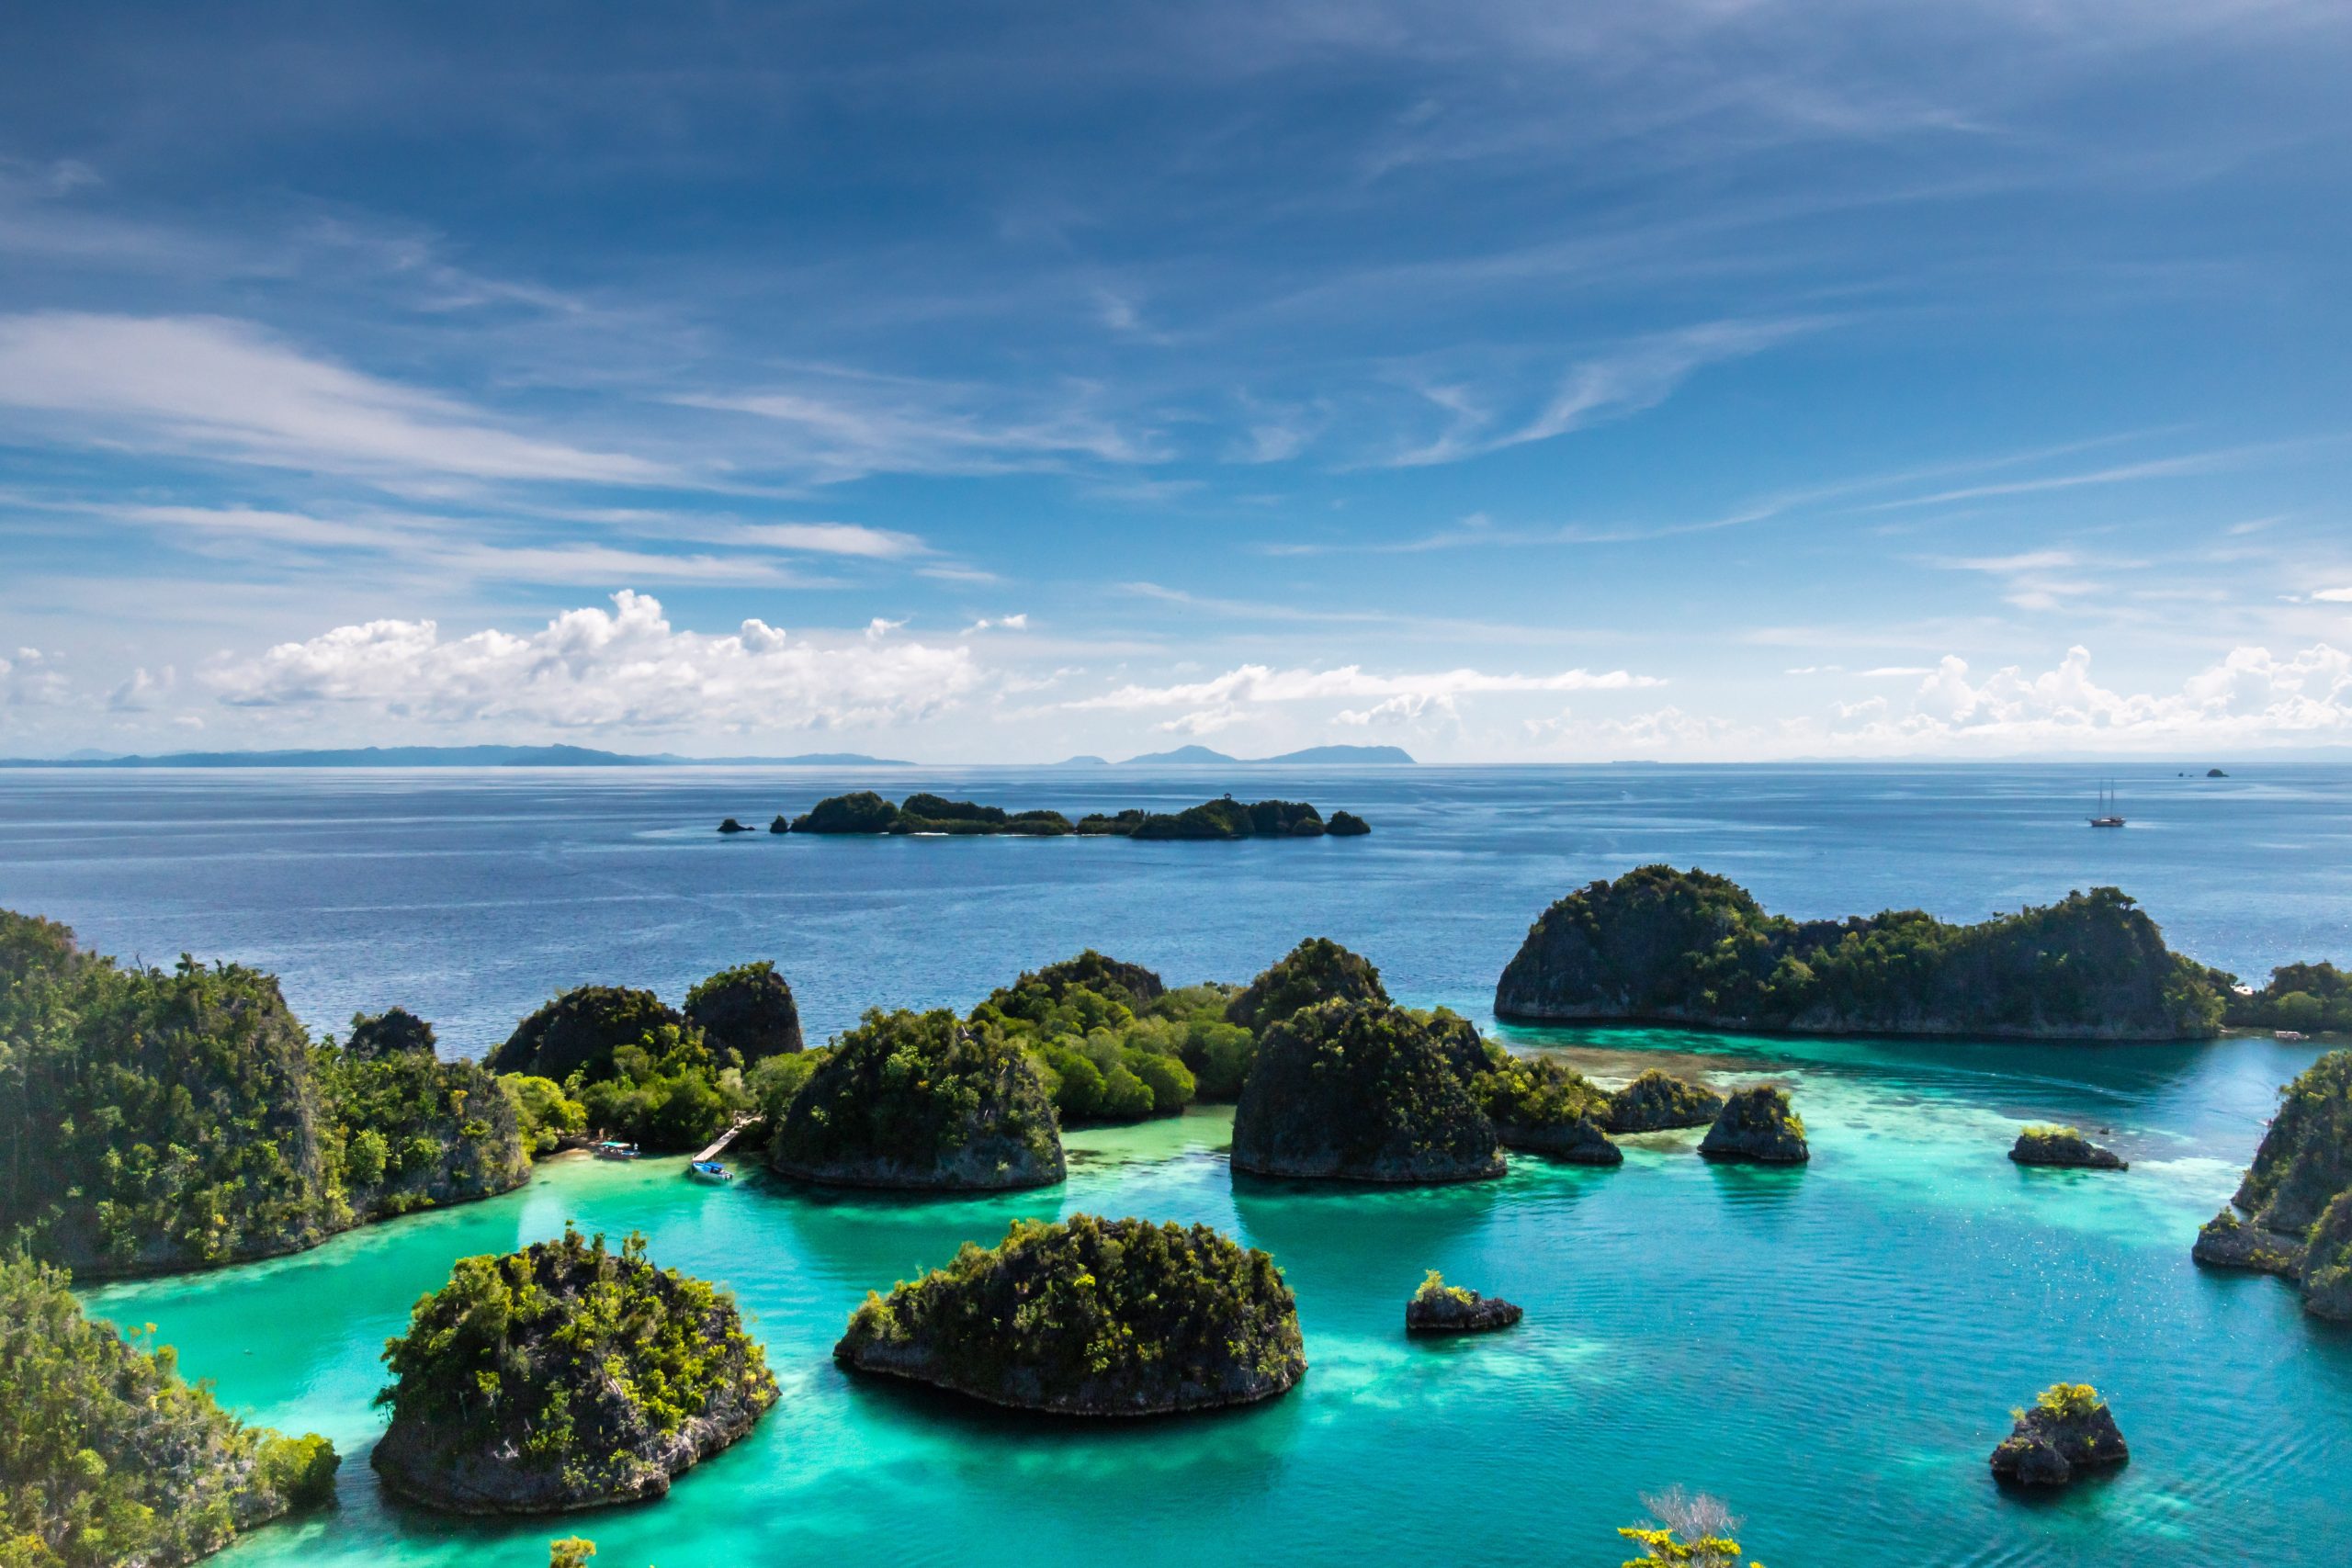 Indonesia's terrestrial biodiversity